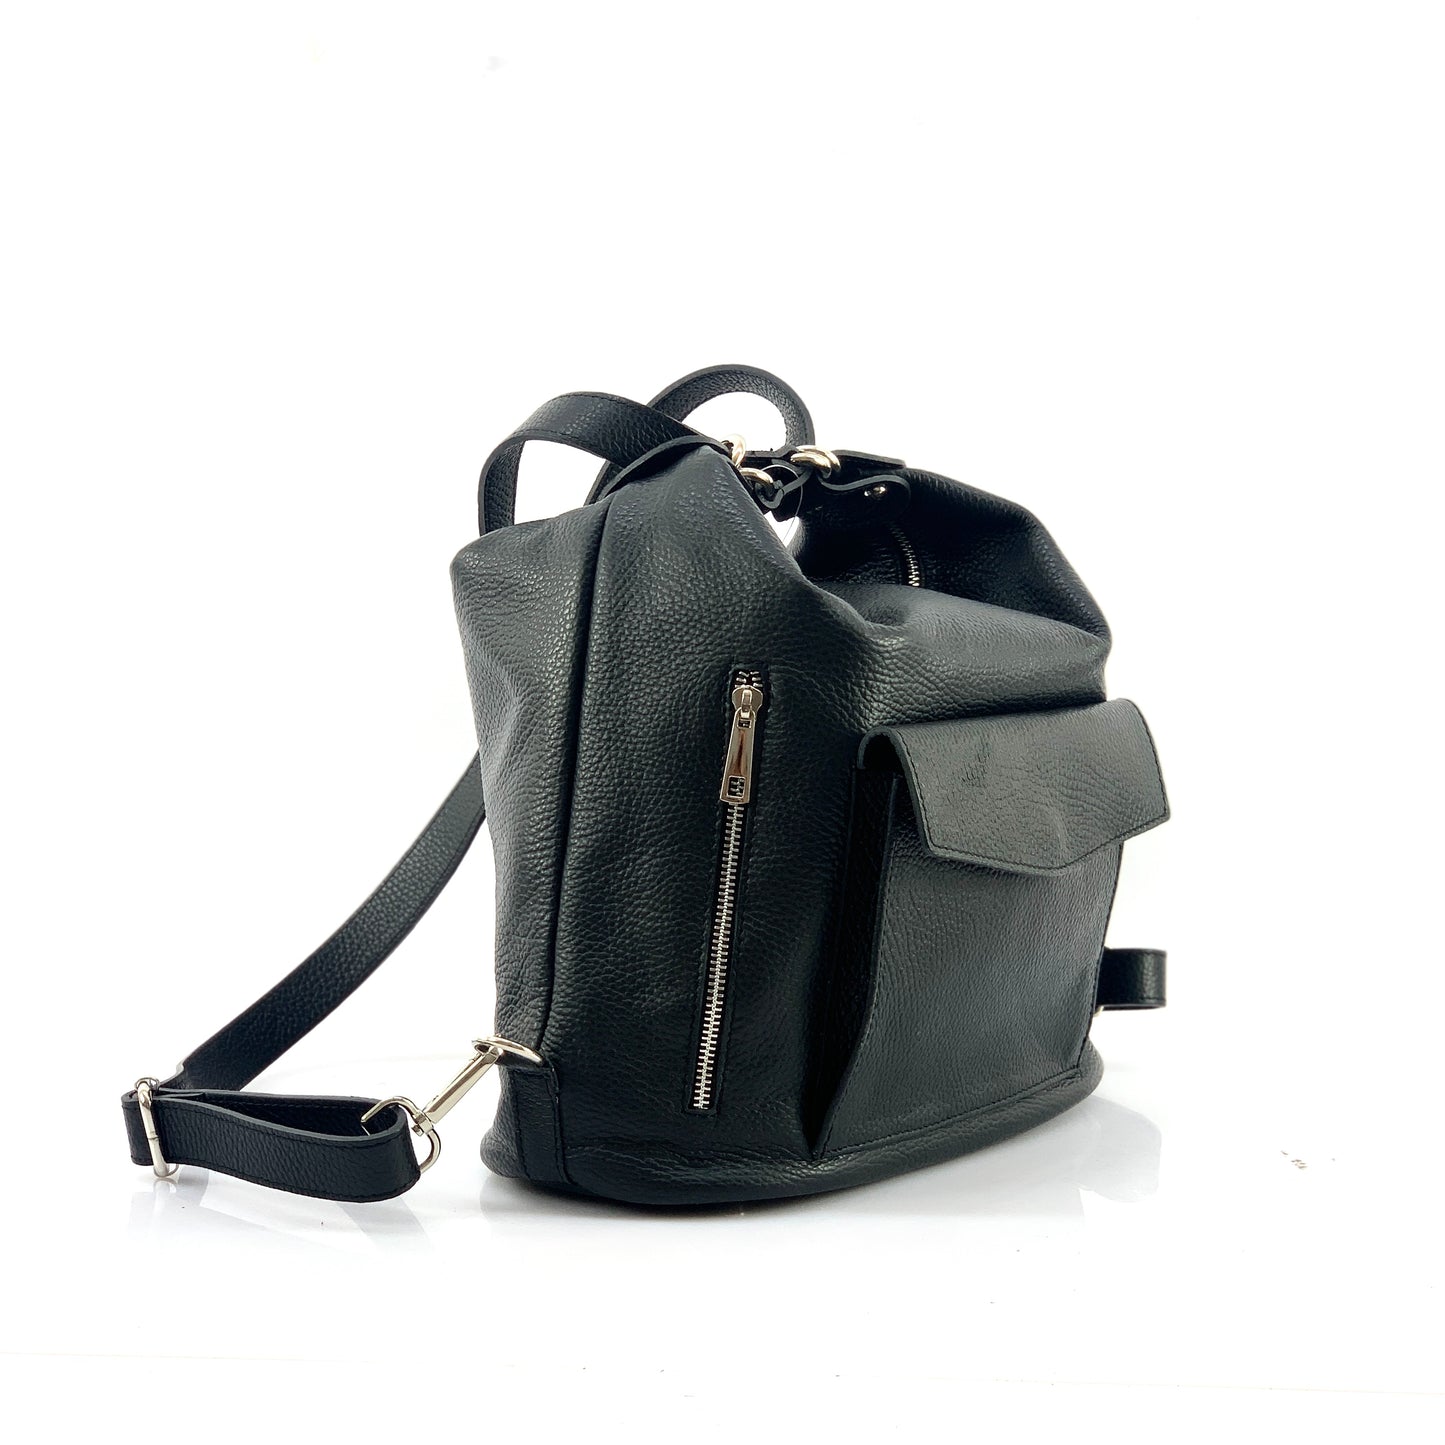 Bag/Backpack Ellen - 14 colors